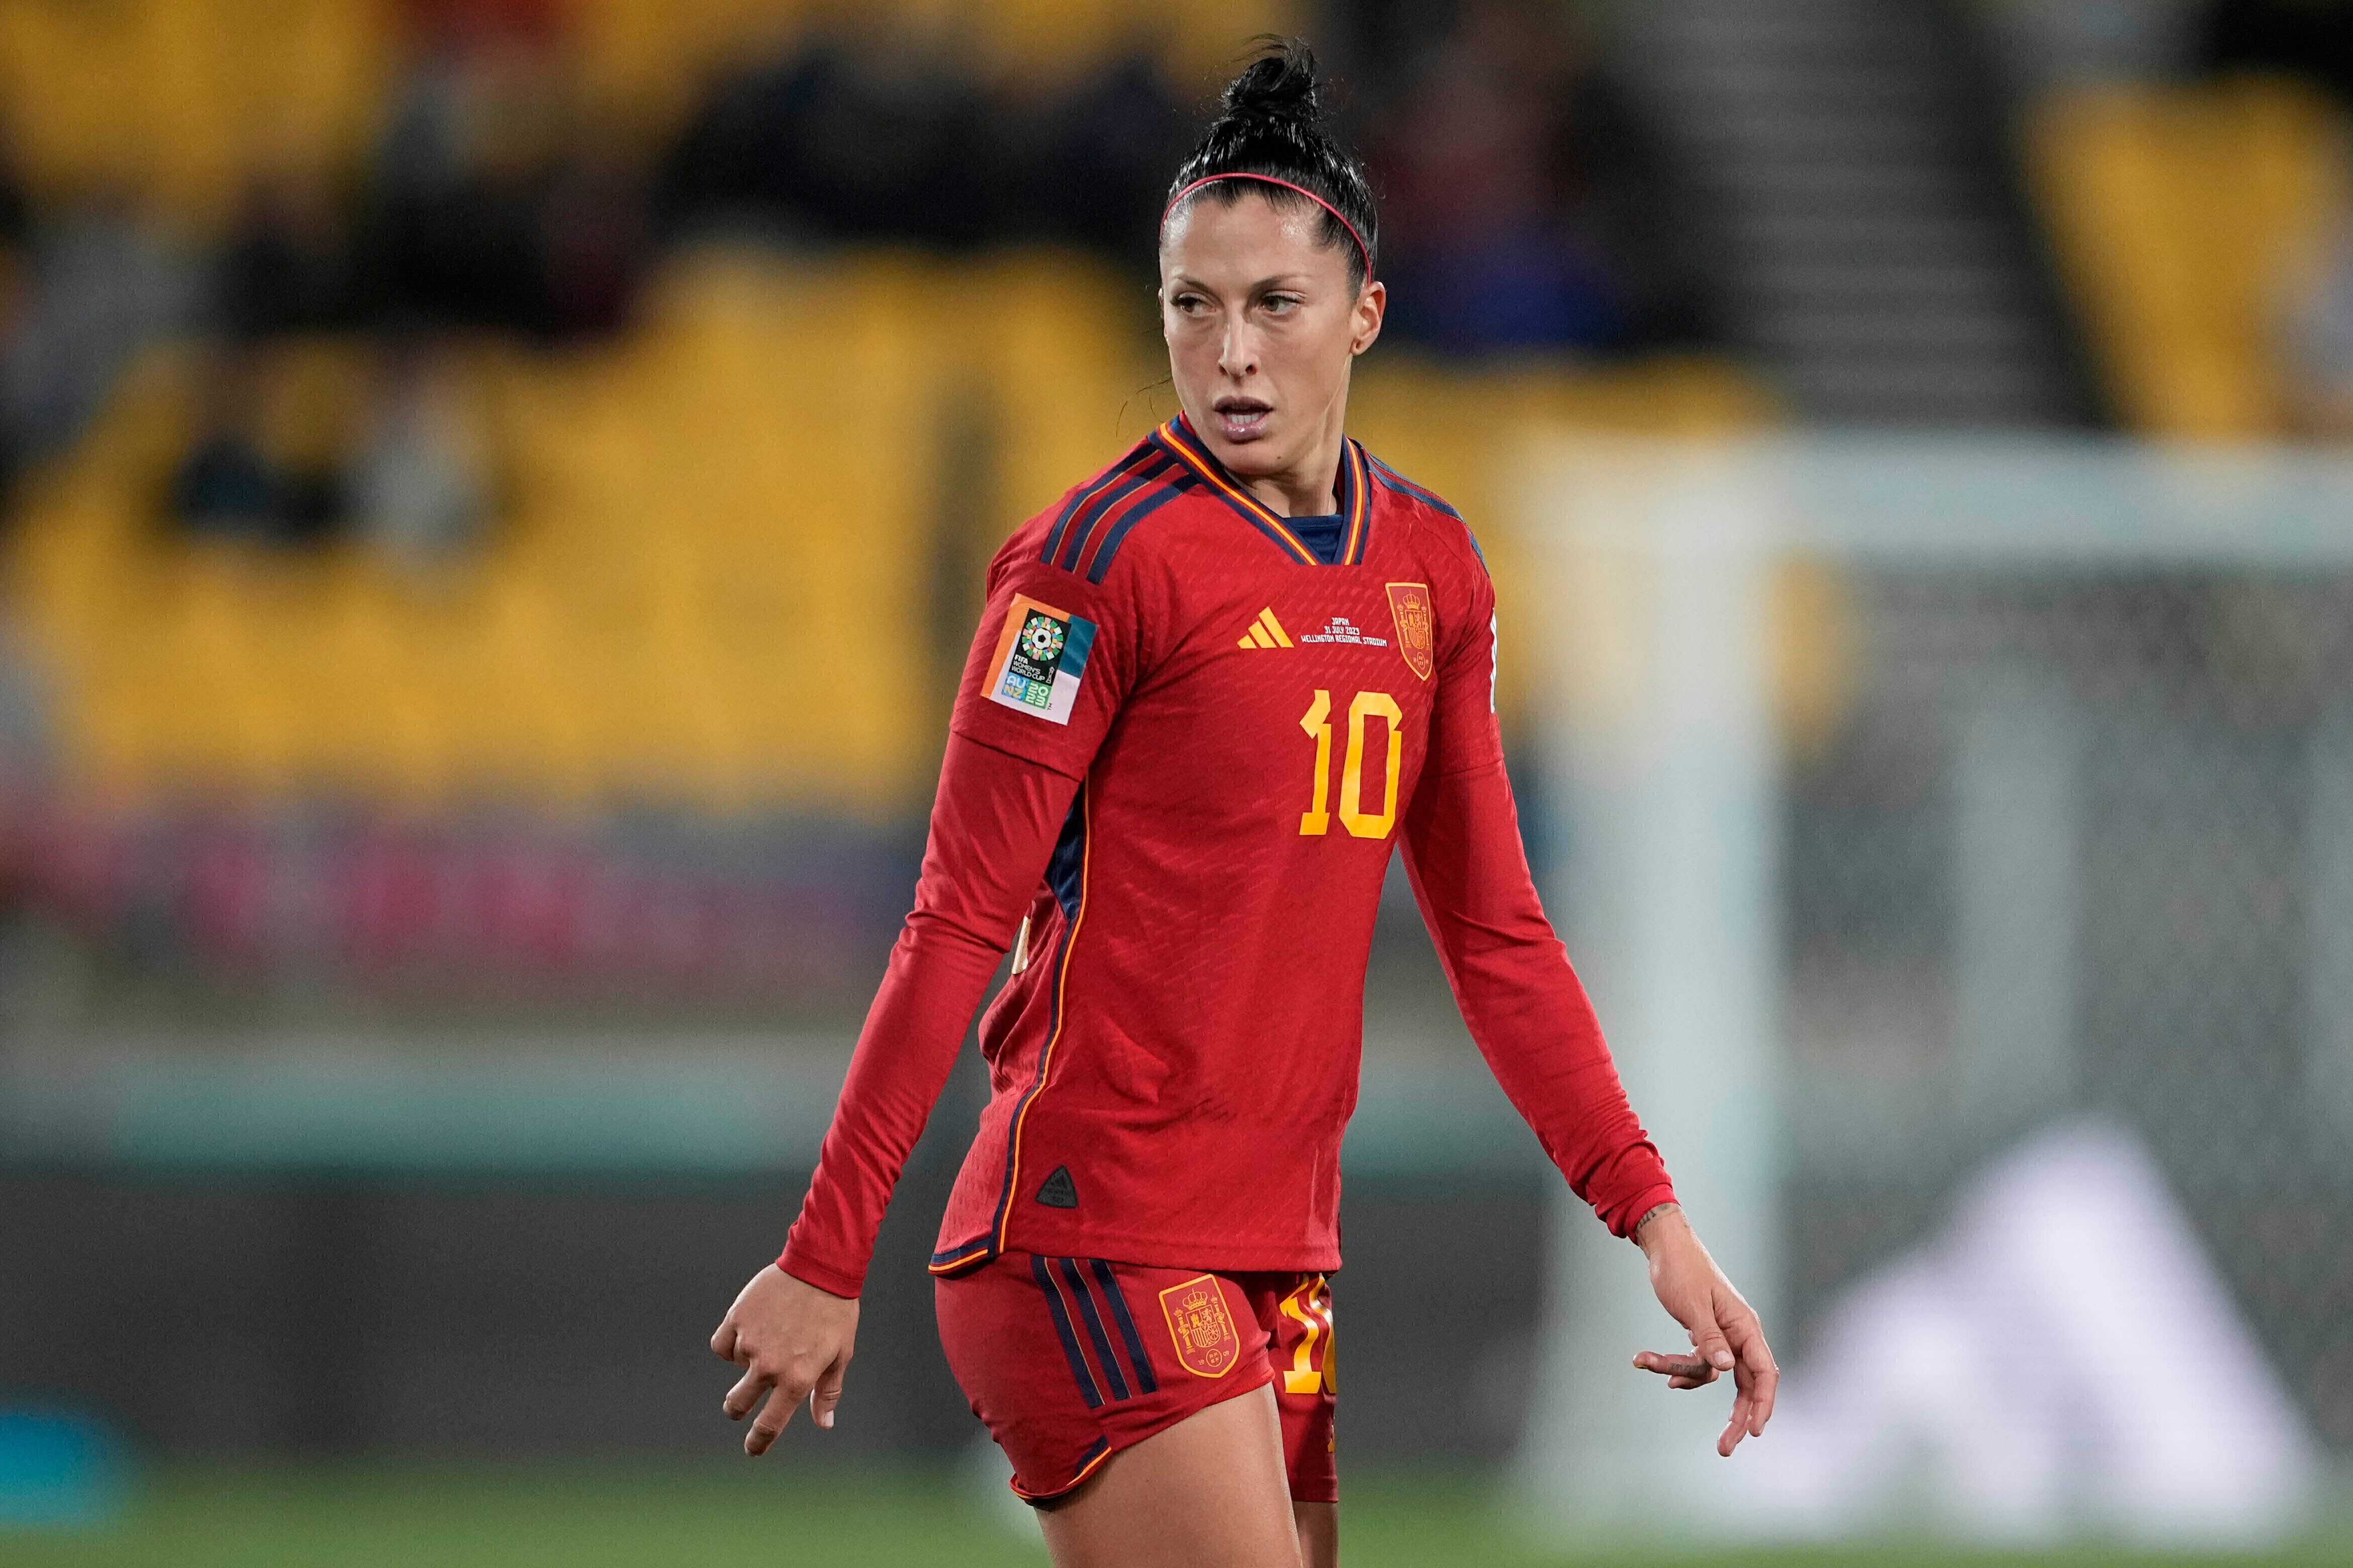 Spanish striker Jenni Hermoso